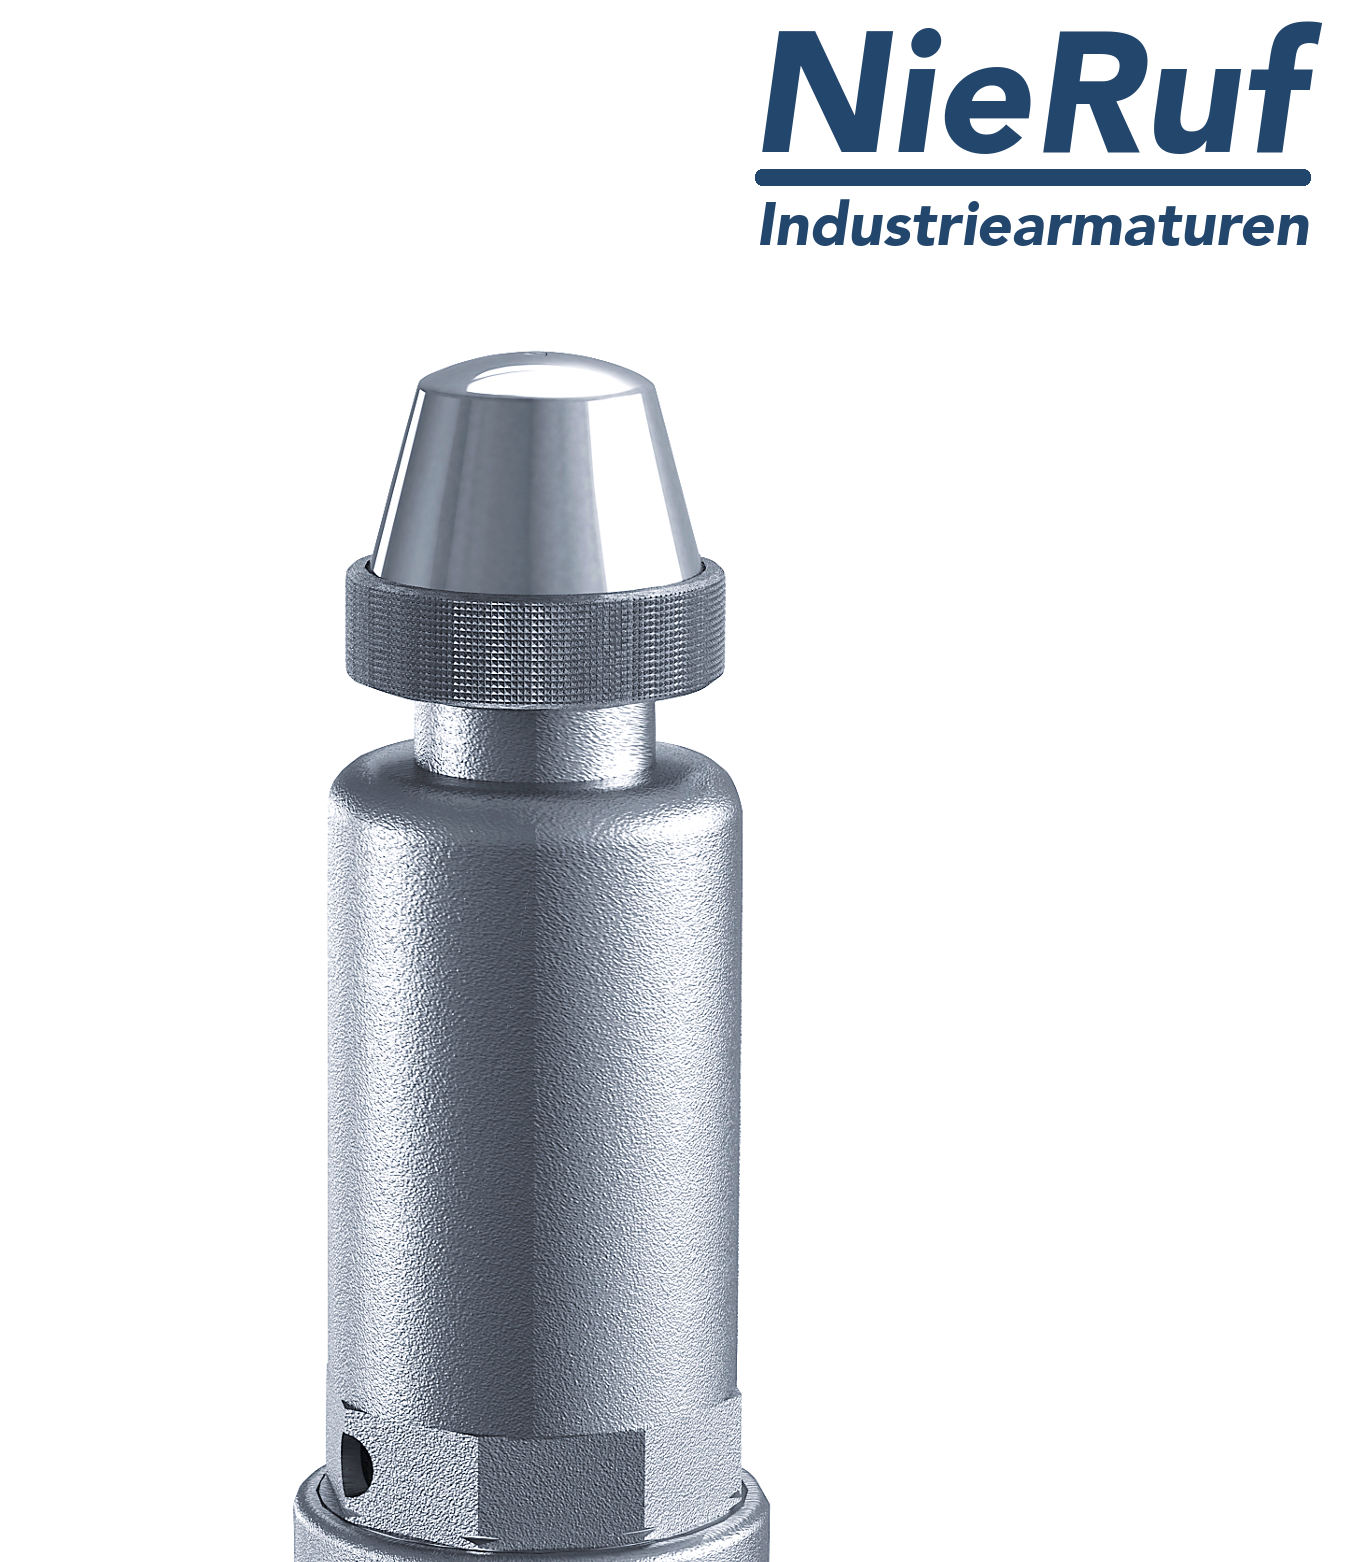 valvola di sicurezza 1 1/4" x 2" F SV09 fluidi gassosi neutri, acciaio inox NBR